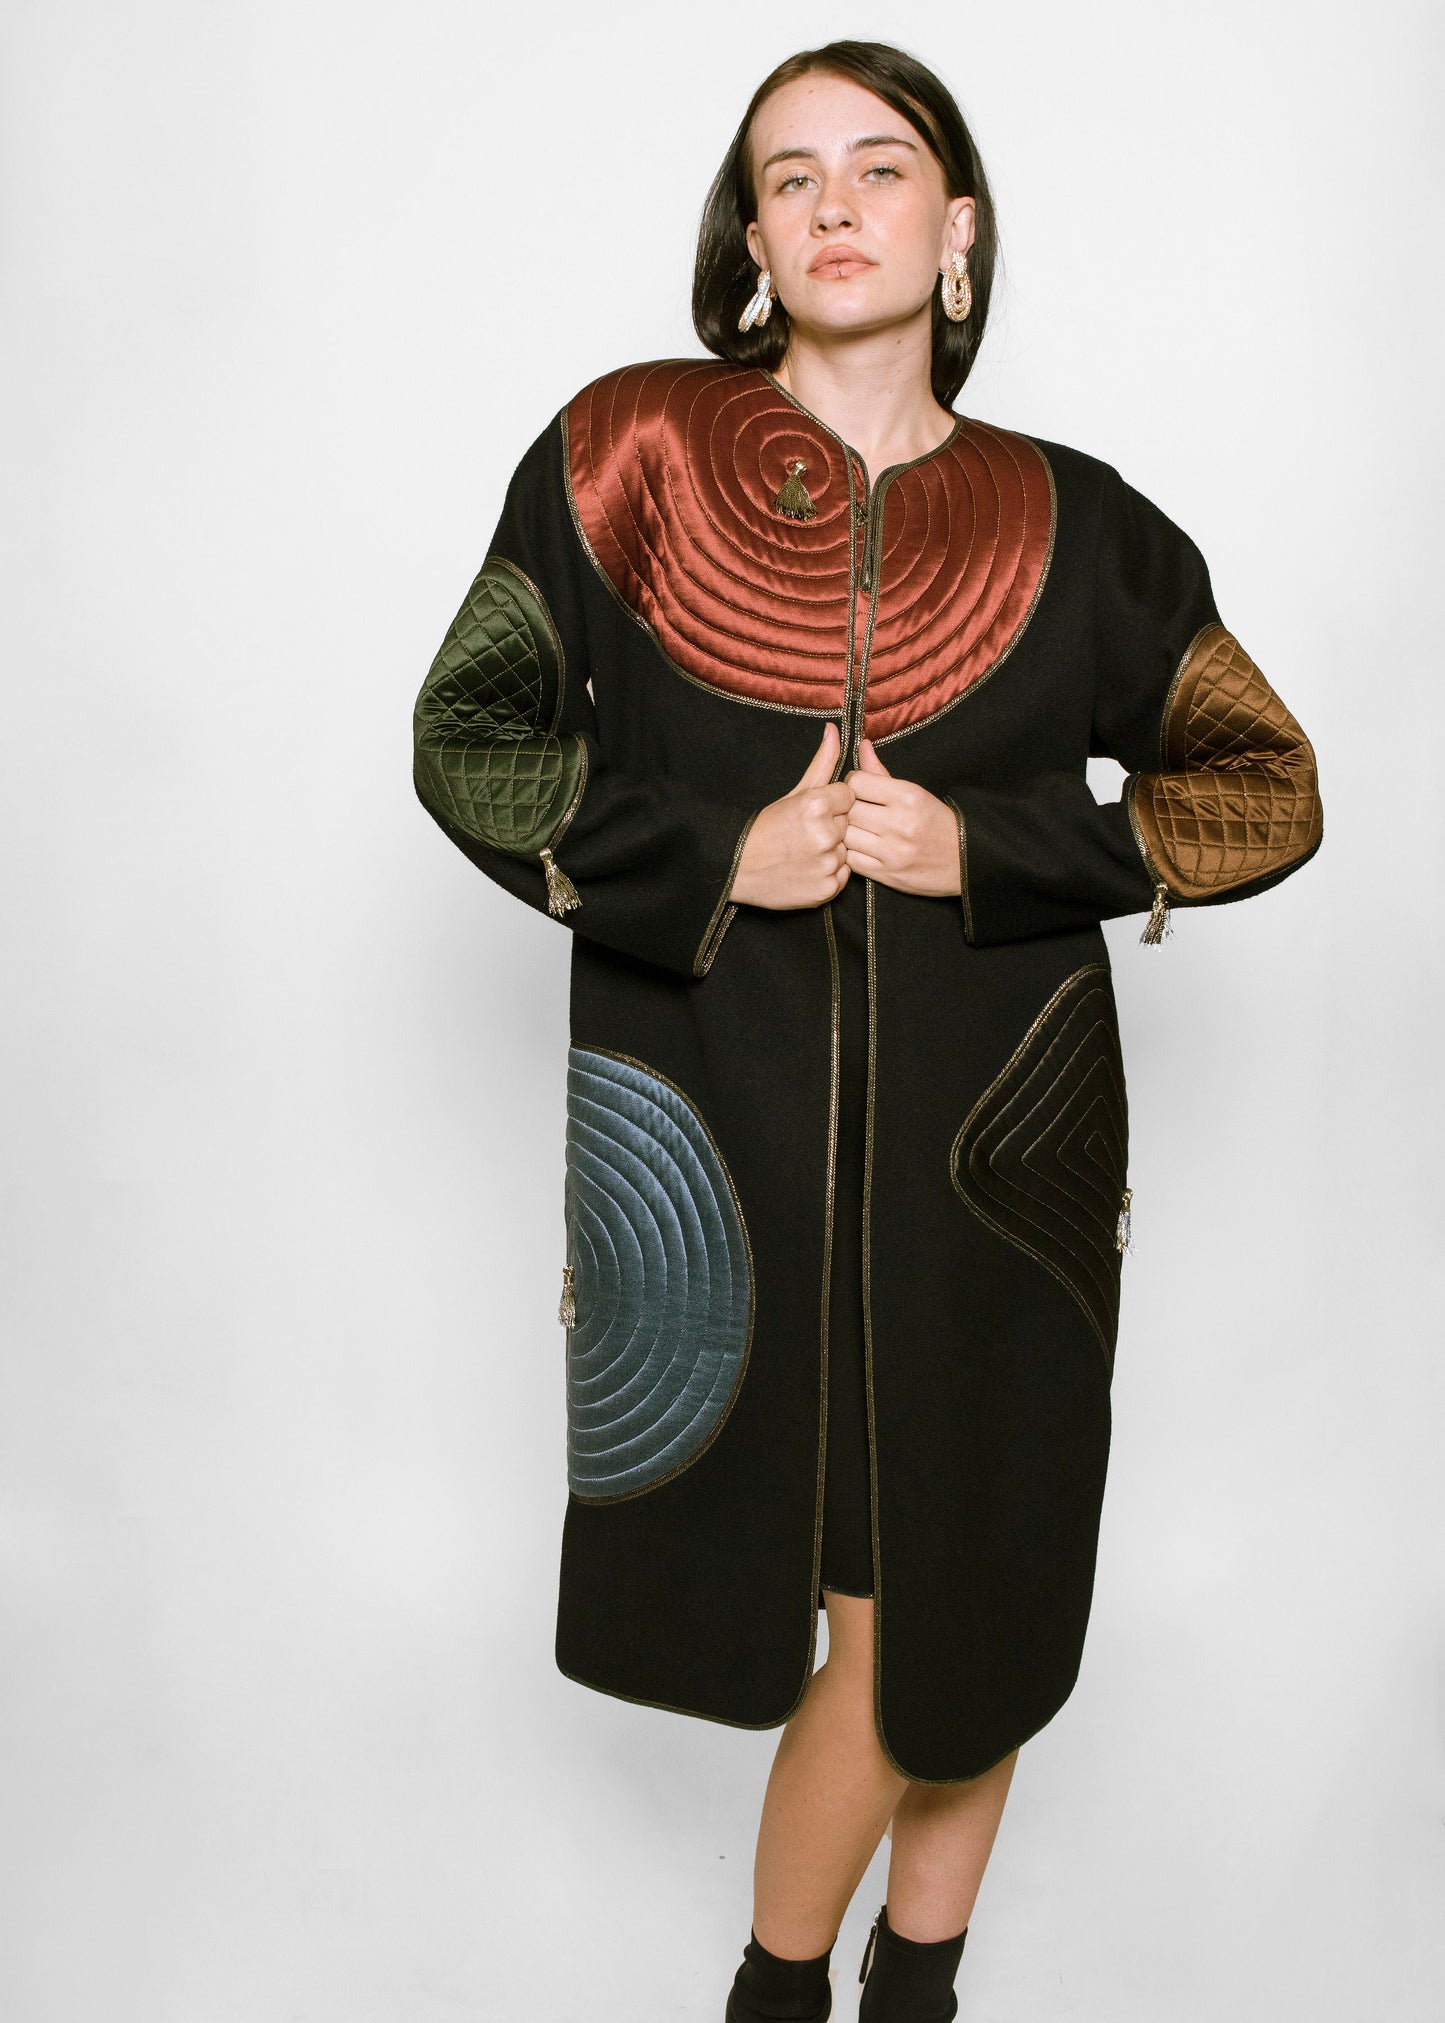 Geoffrey Beene 1983 Tassel Patchwork Coat & Dress